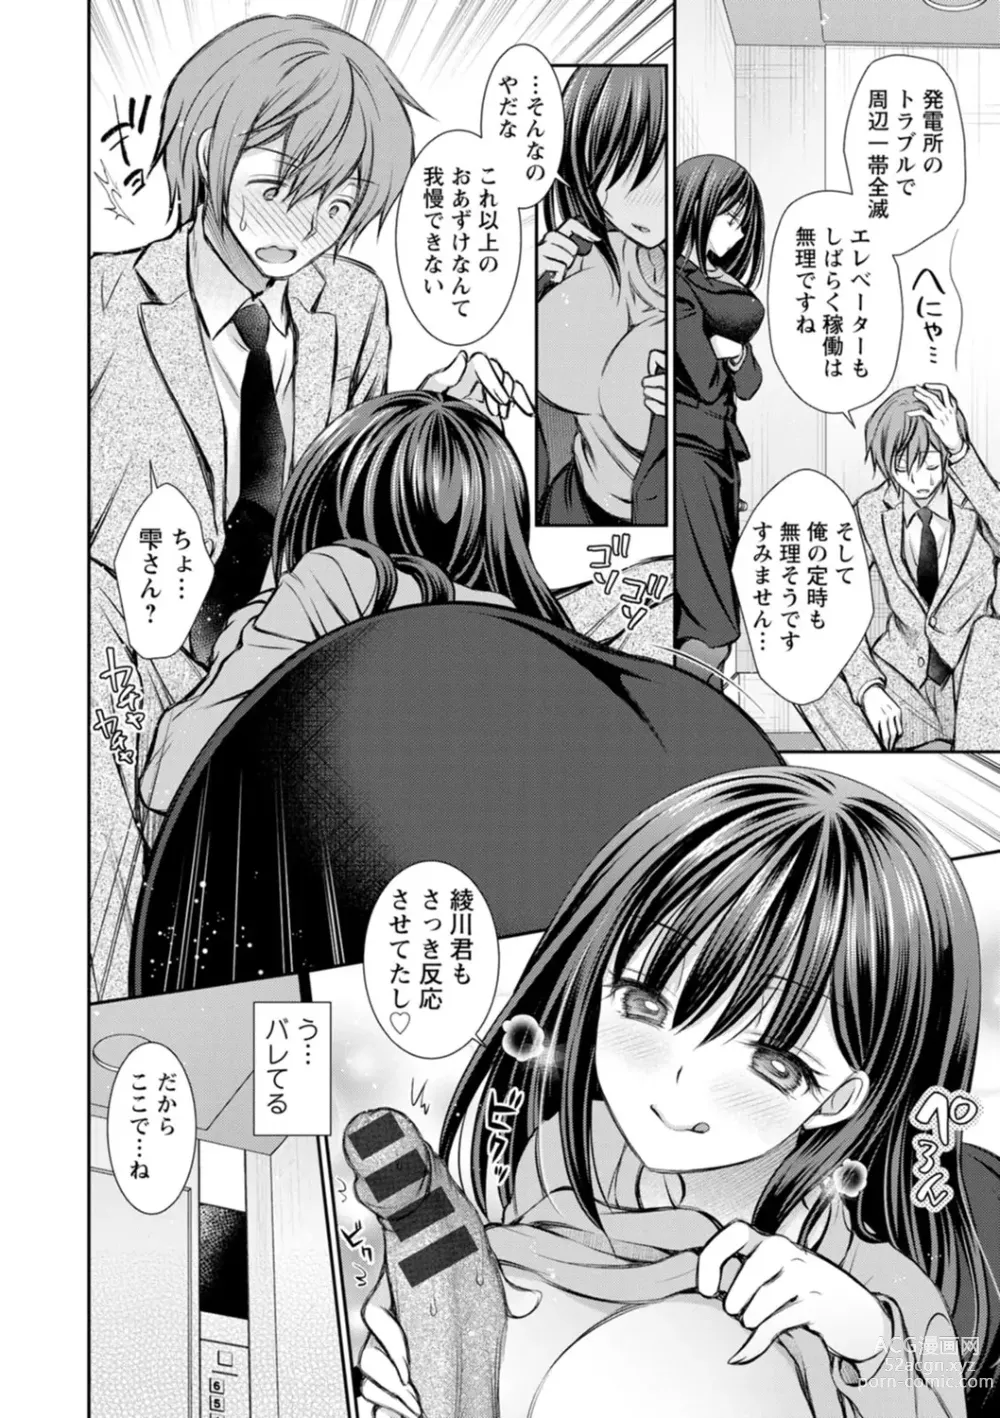 Page 10 of manga Furete Mitakute.